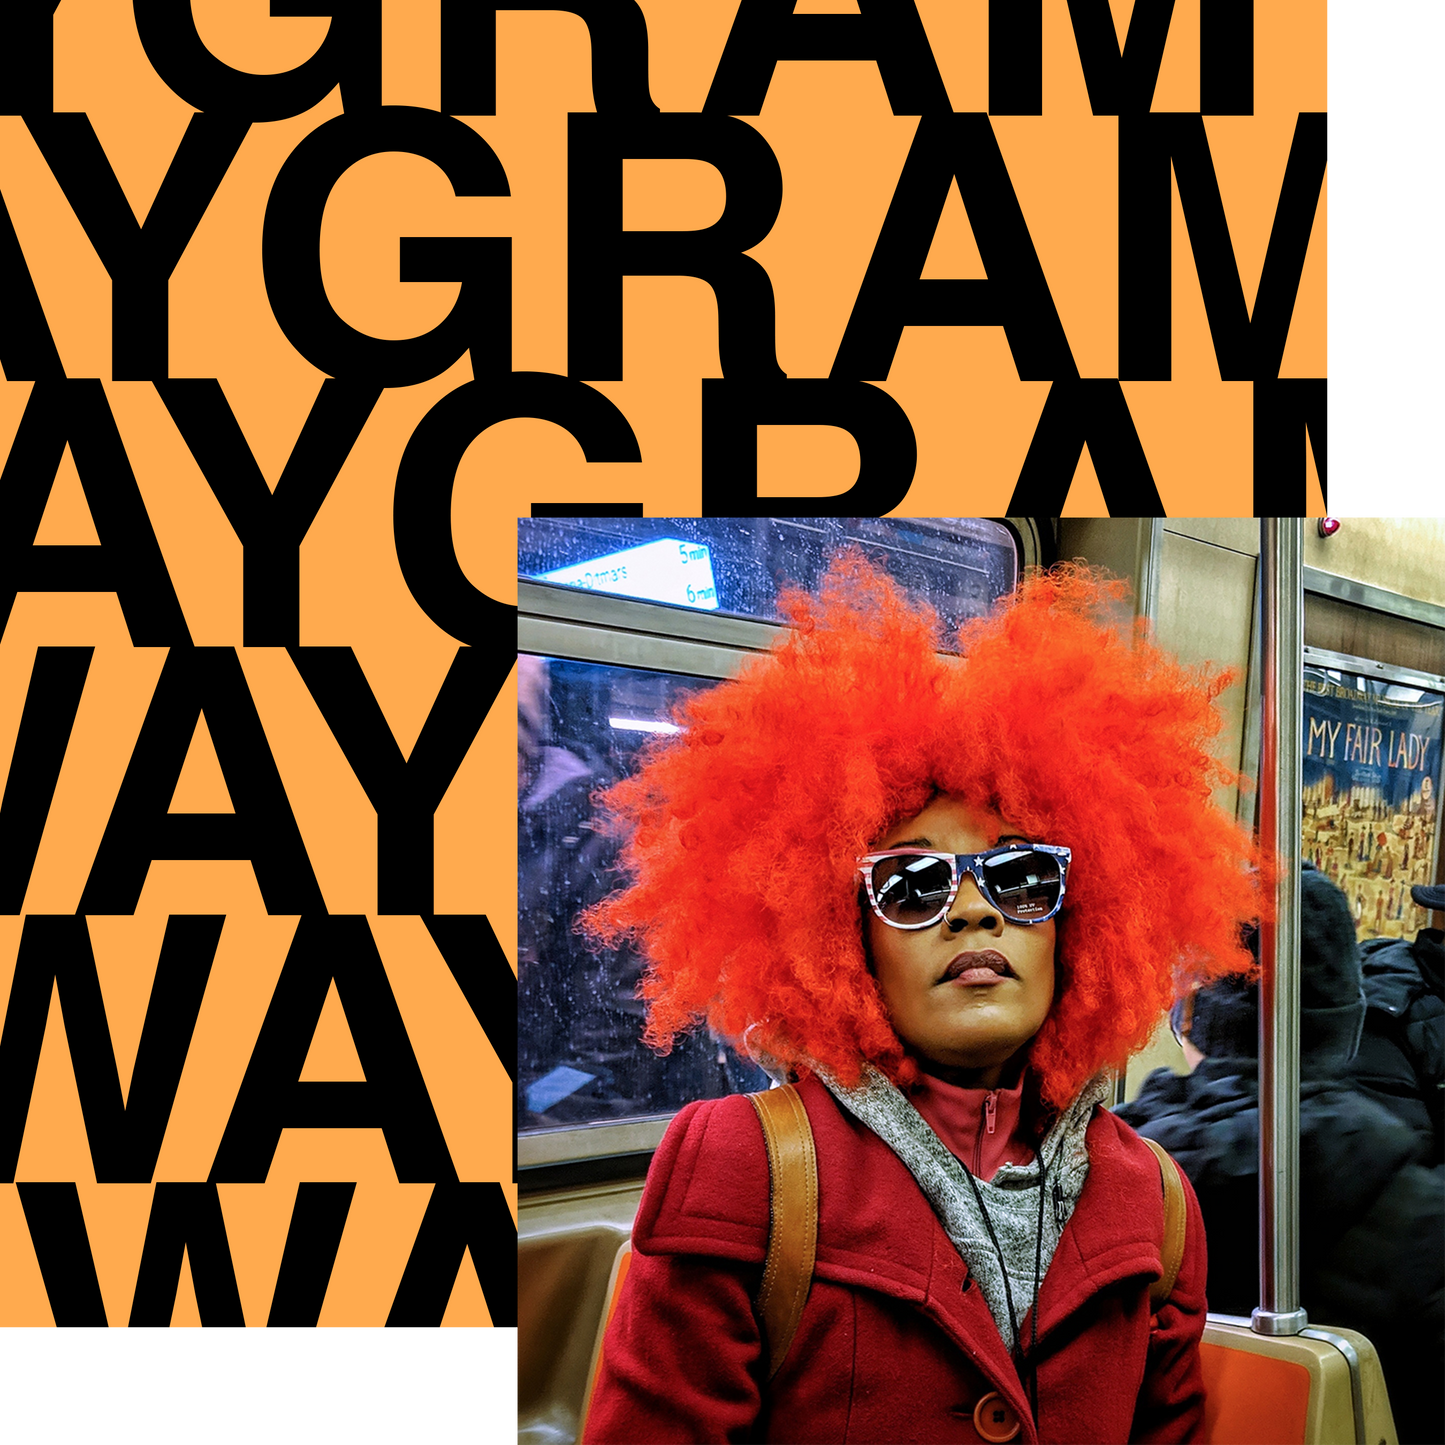 Subwaygram (first edition)